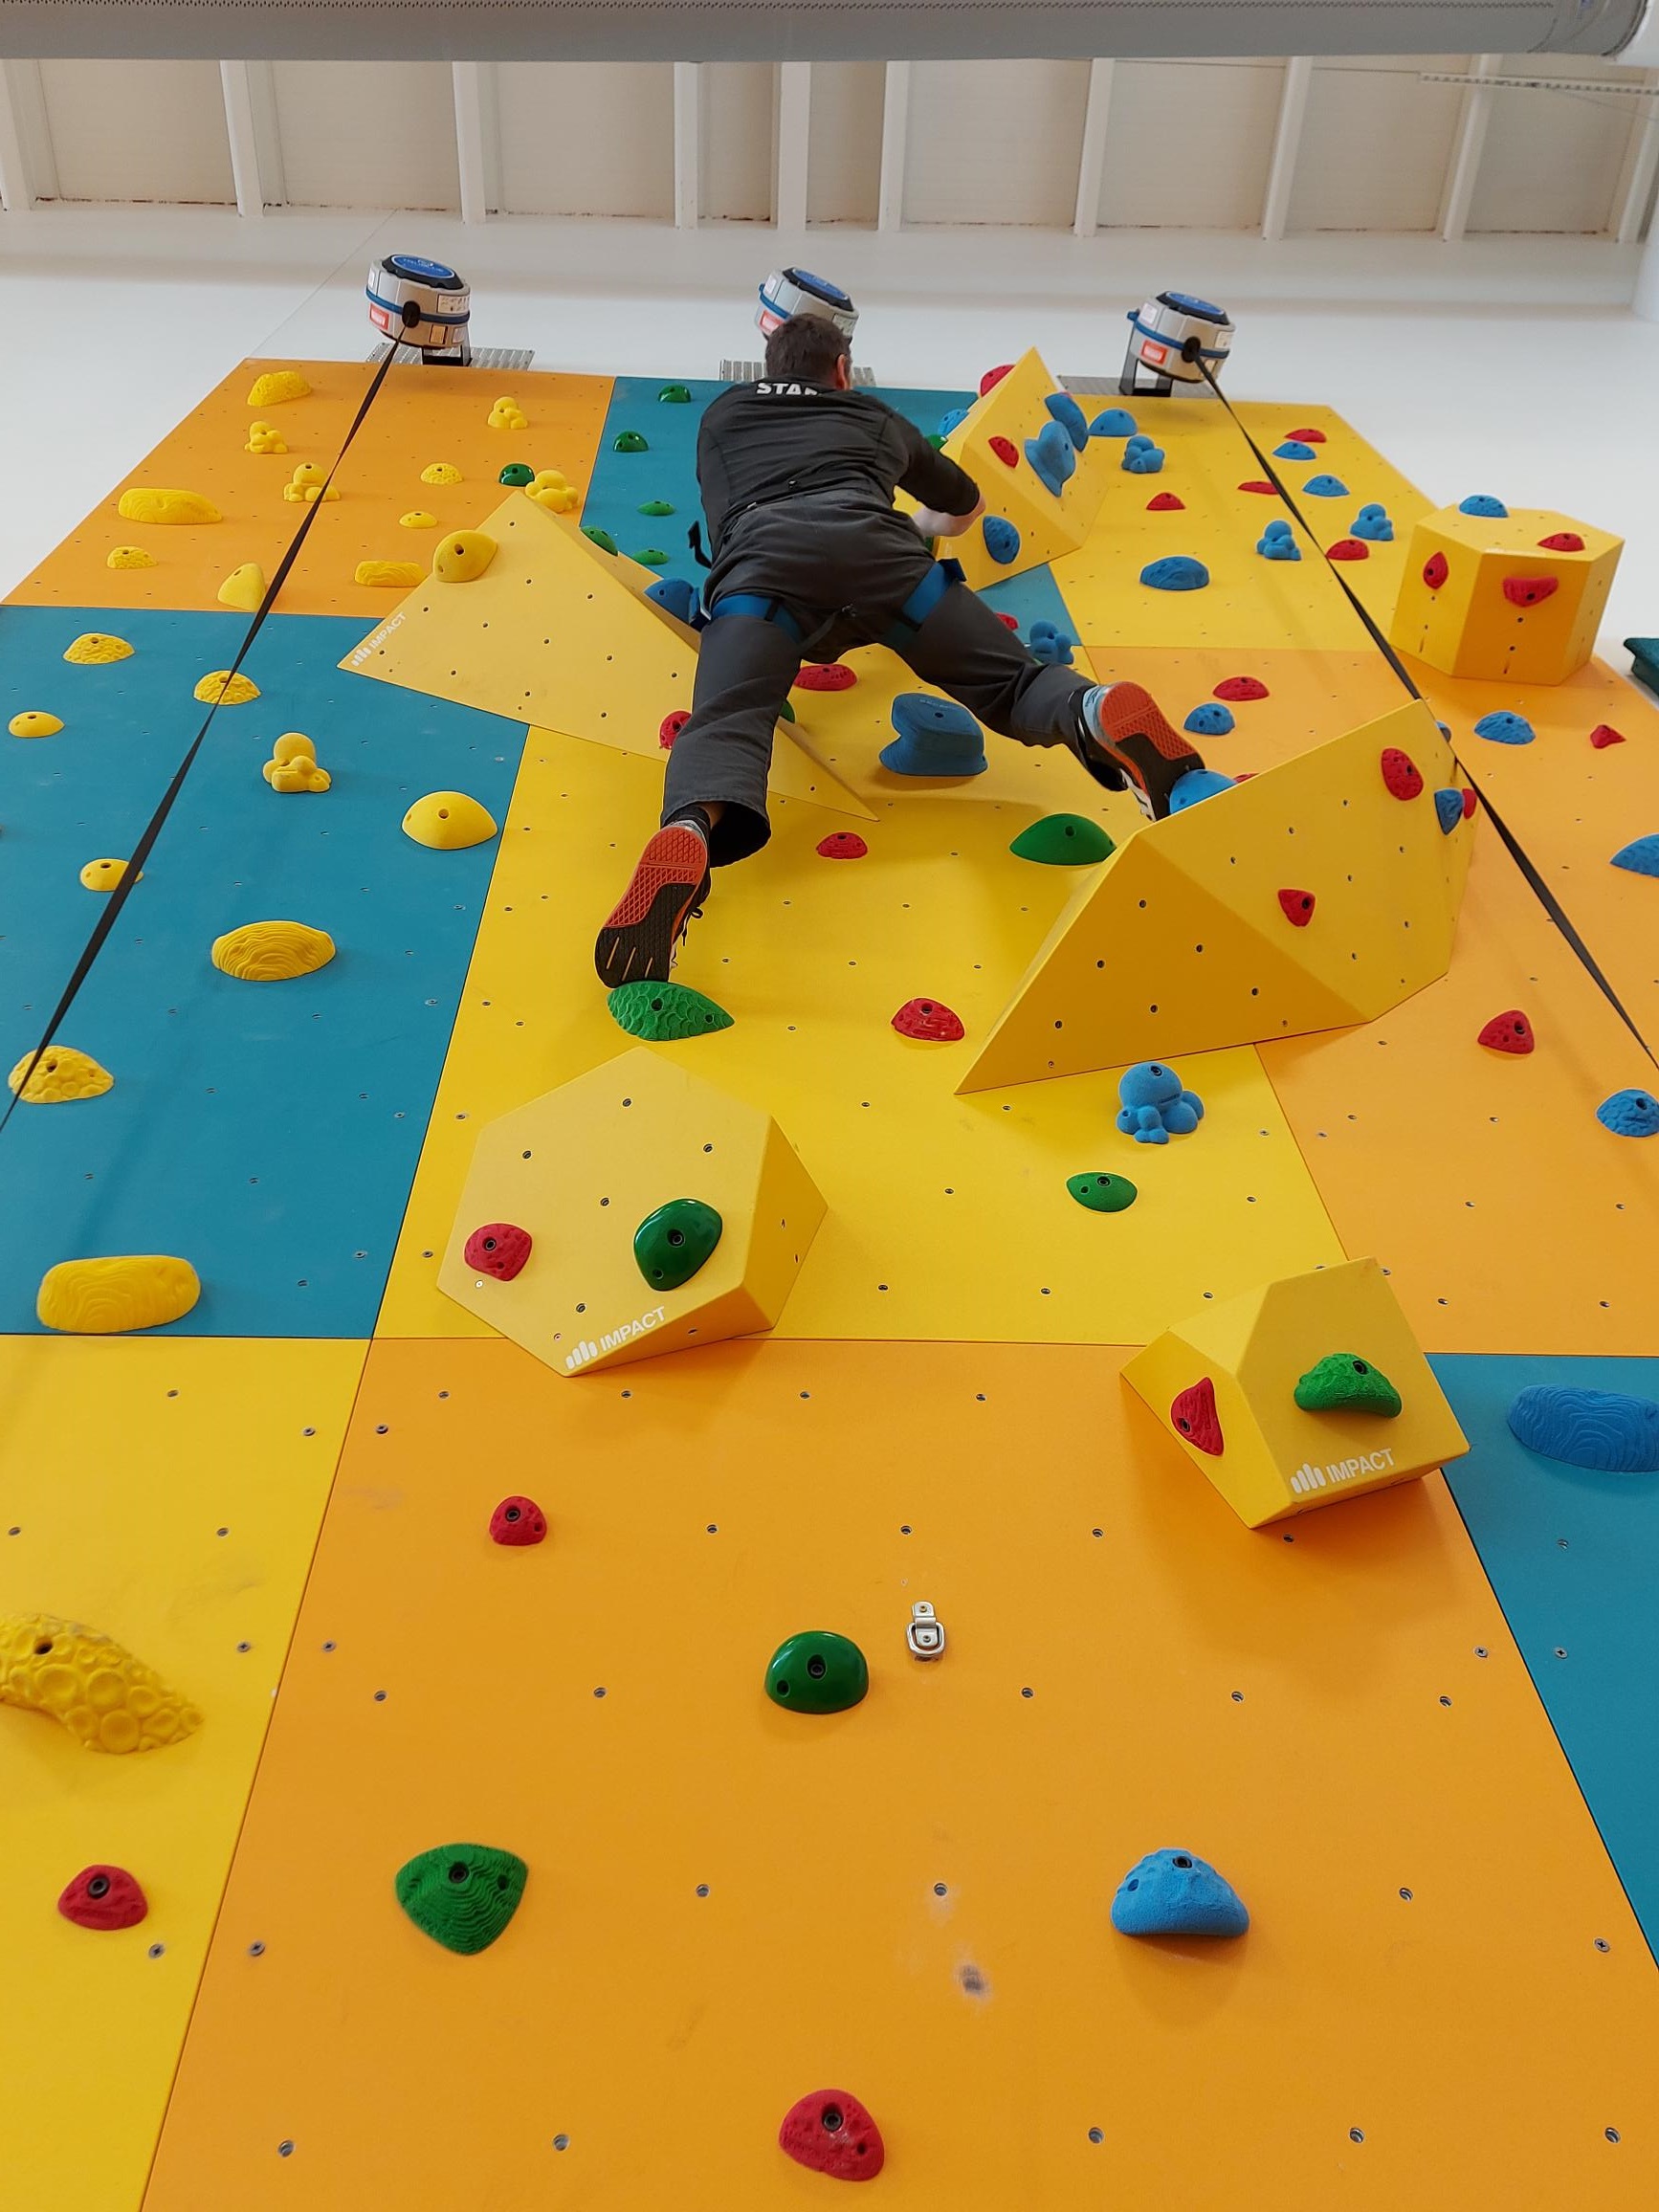 vertical view of a person climbing an indoor rock climbing wall